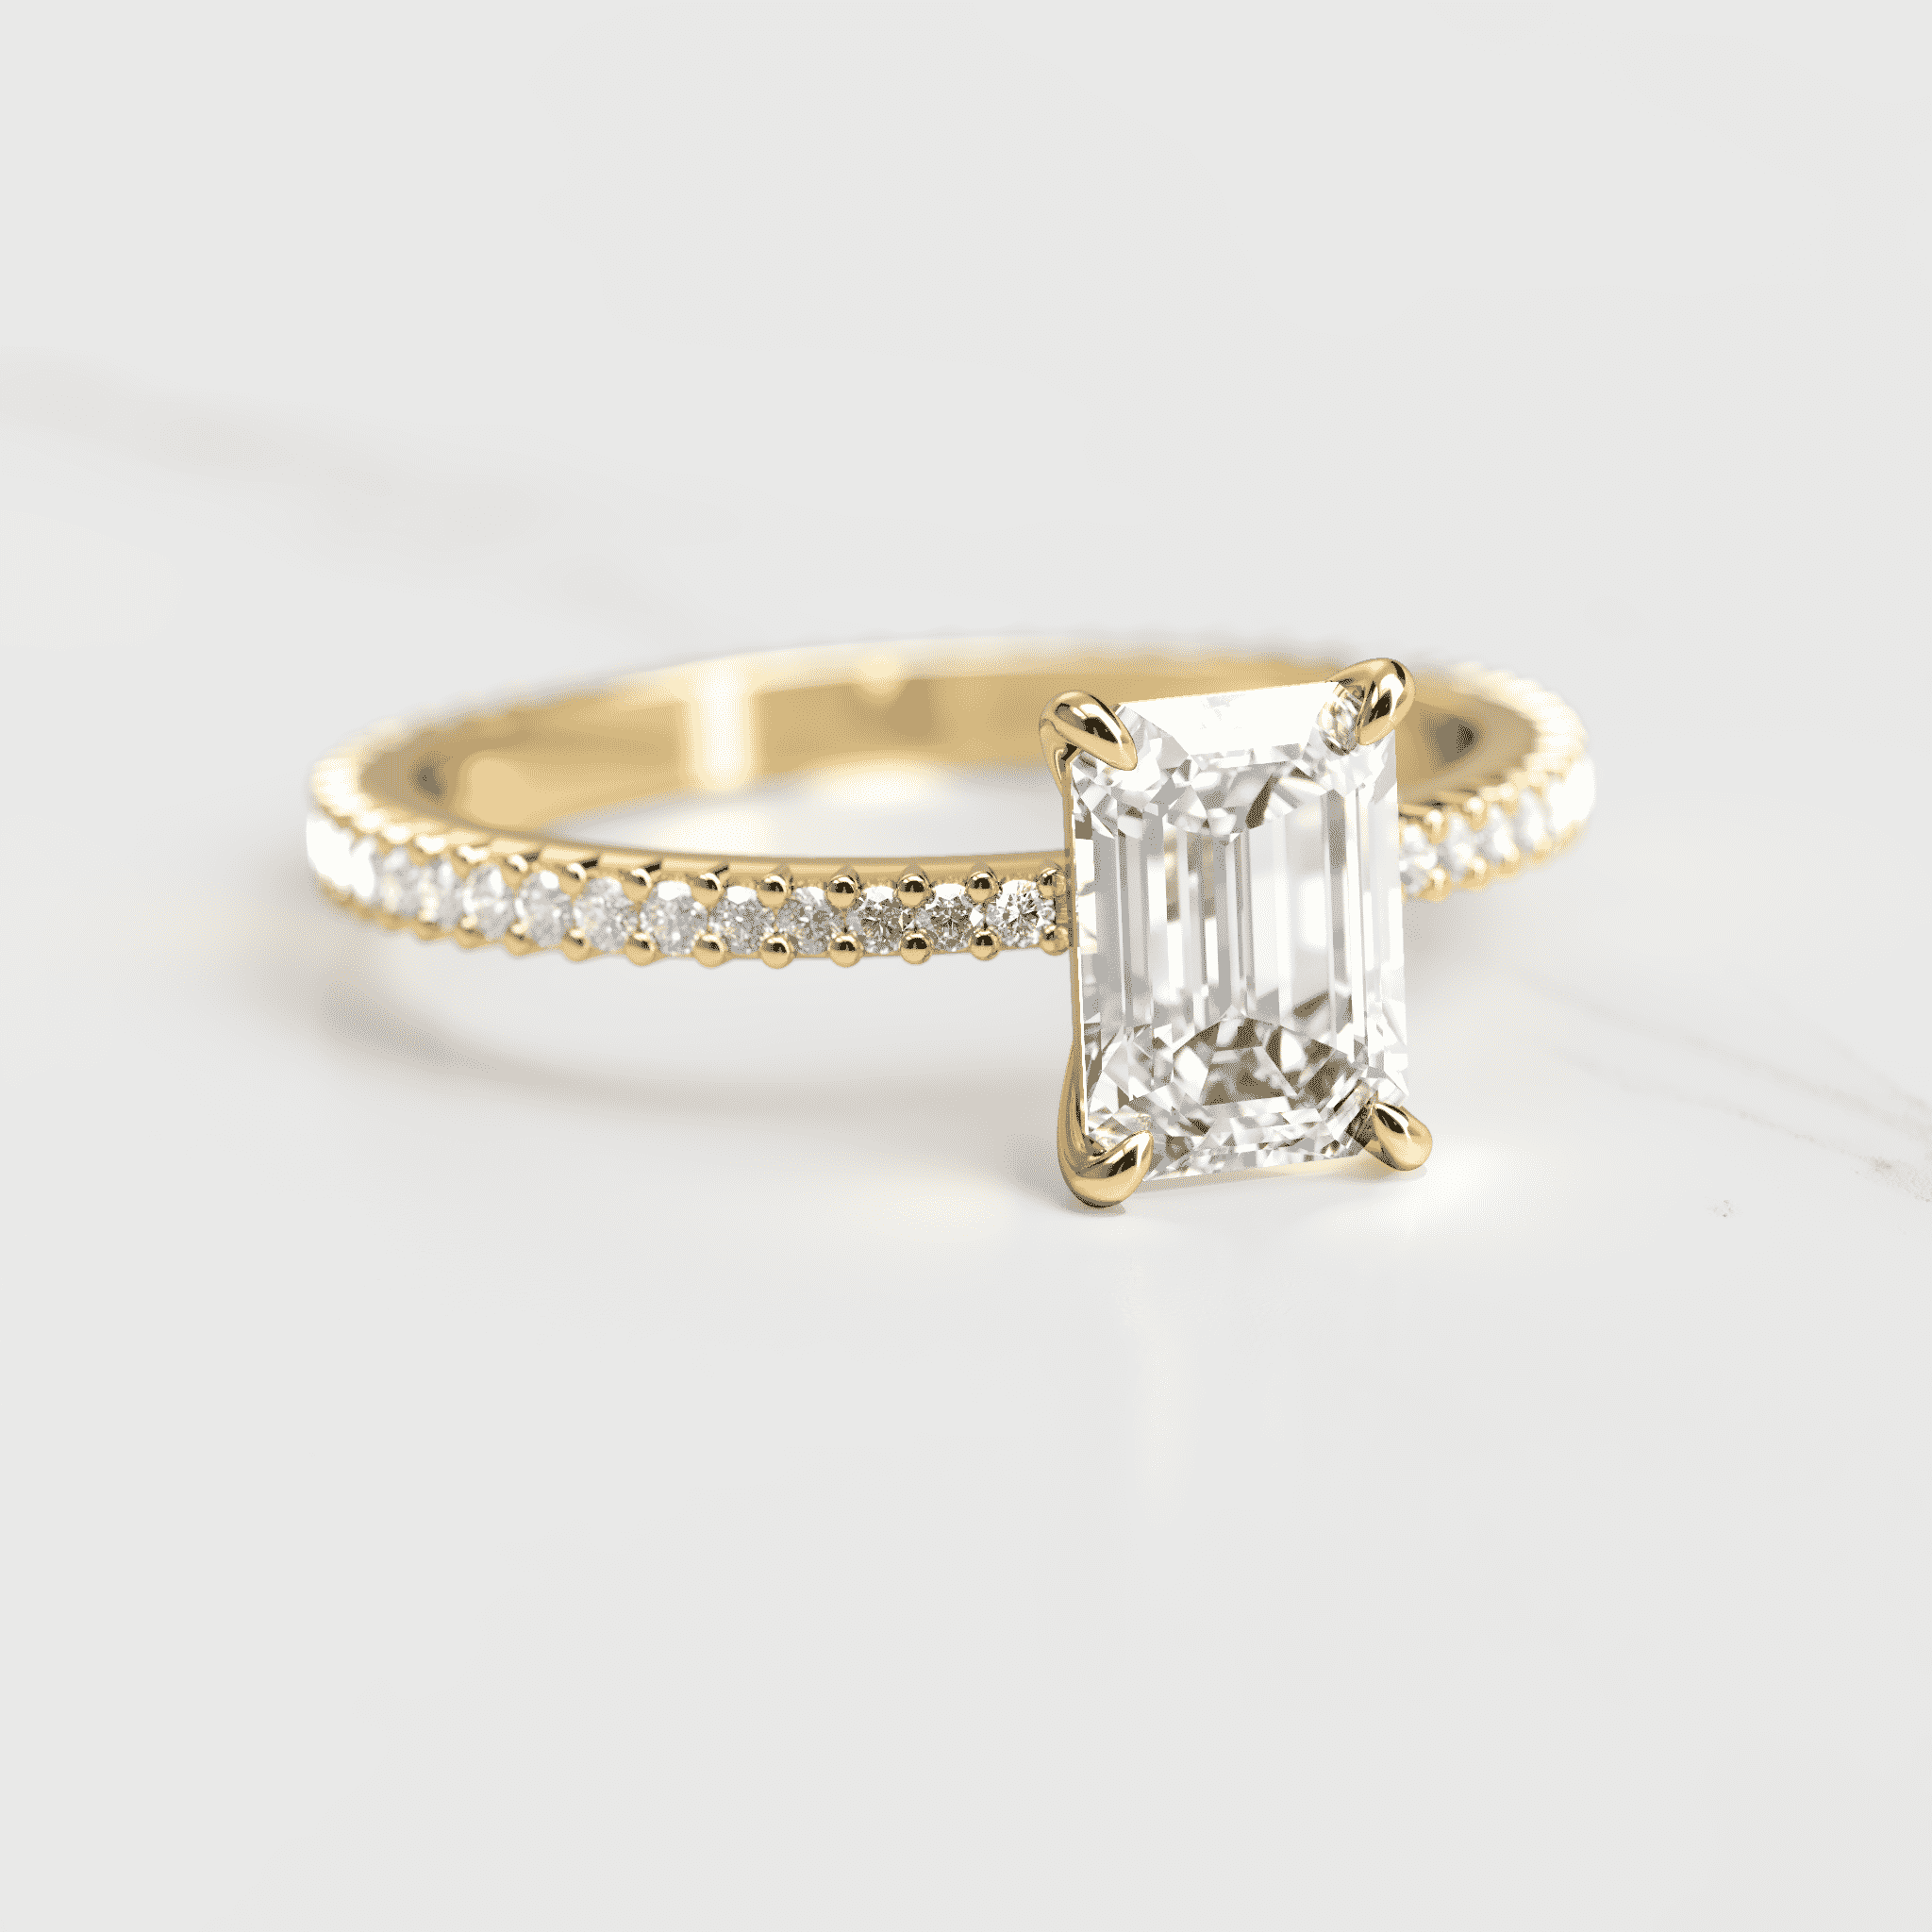 EMERALD FULL PAVE TAPERED DIAMOND RING - 18k white gold / 0.5ct / lab diamond